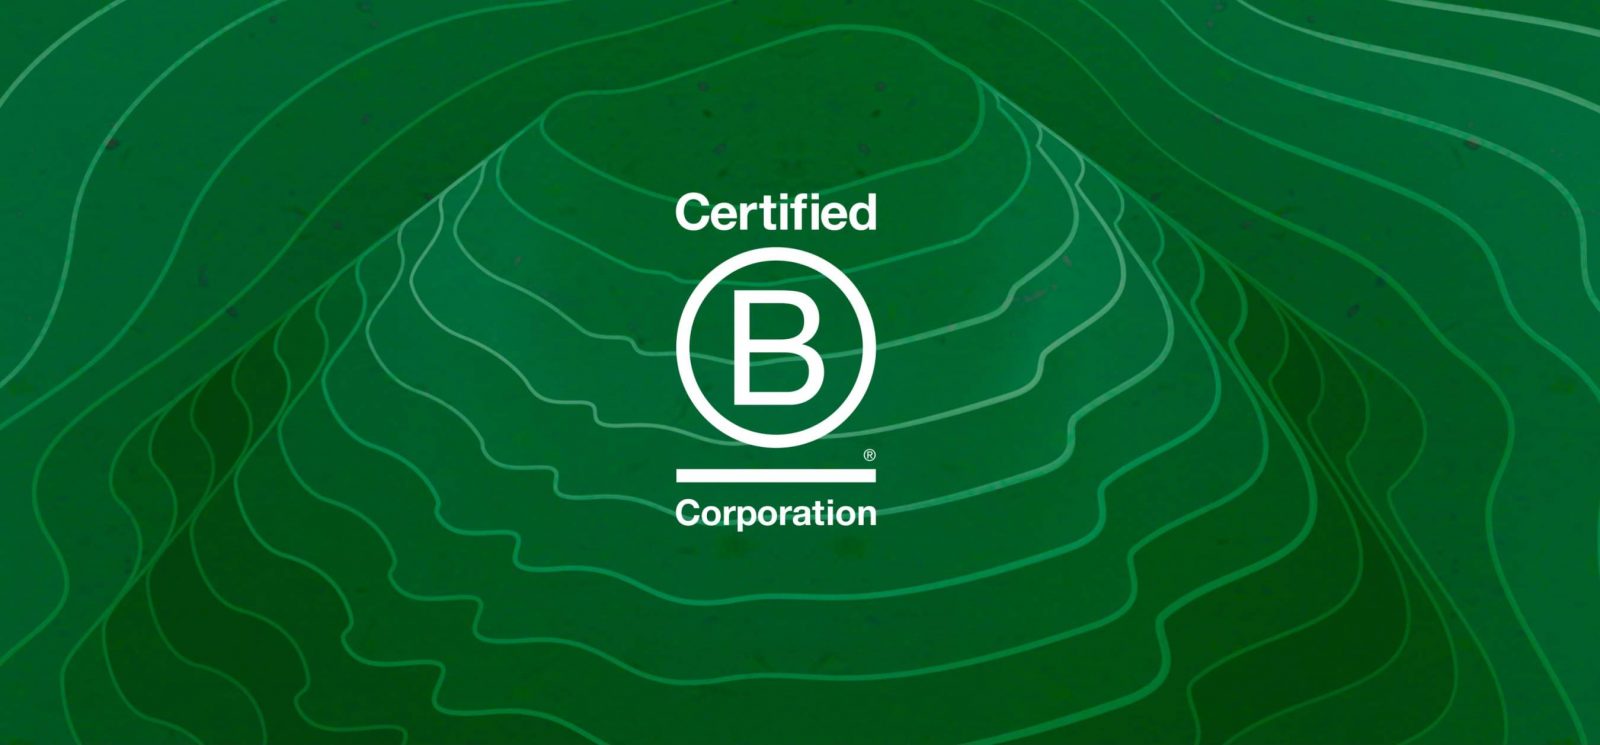 A B Corp certification symbol